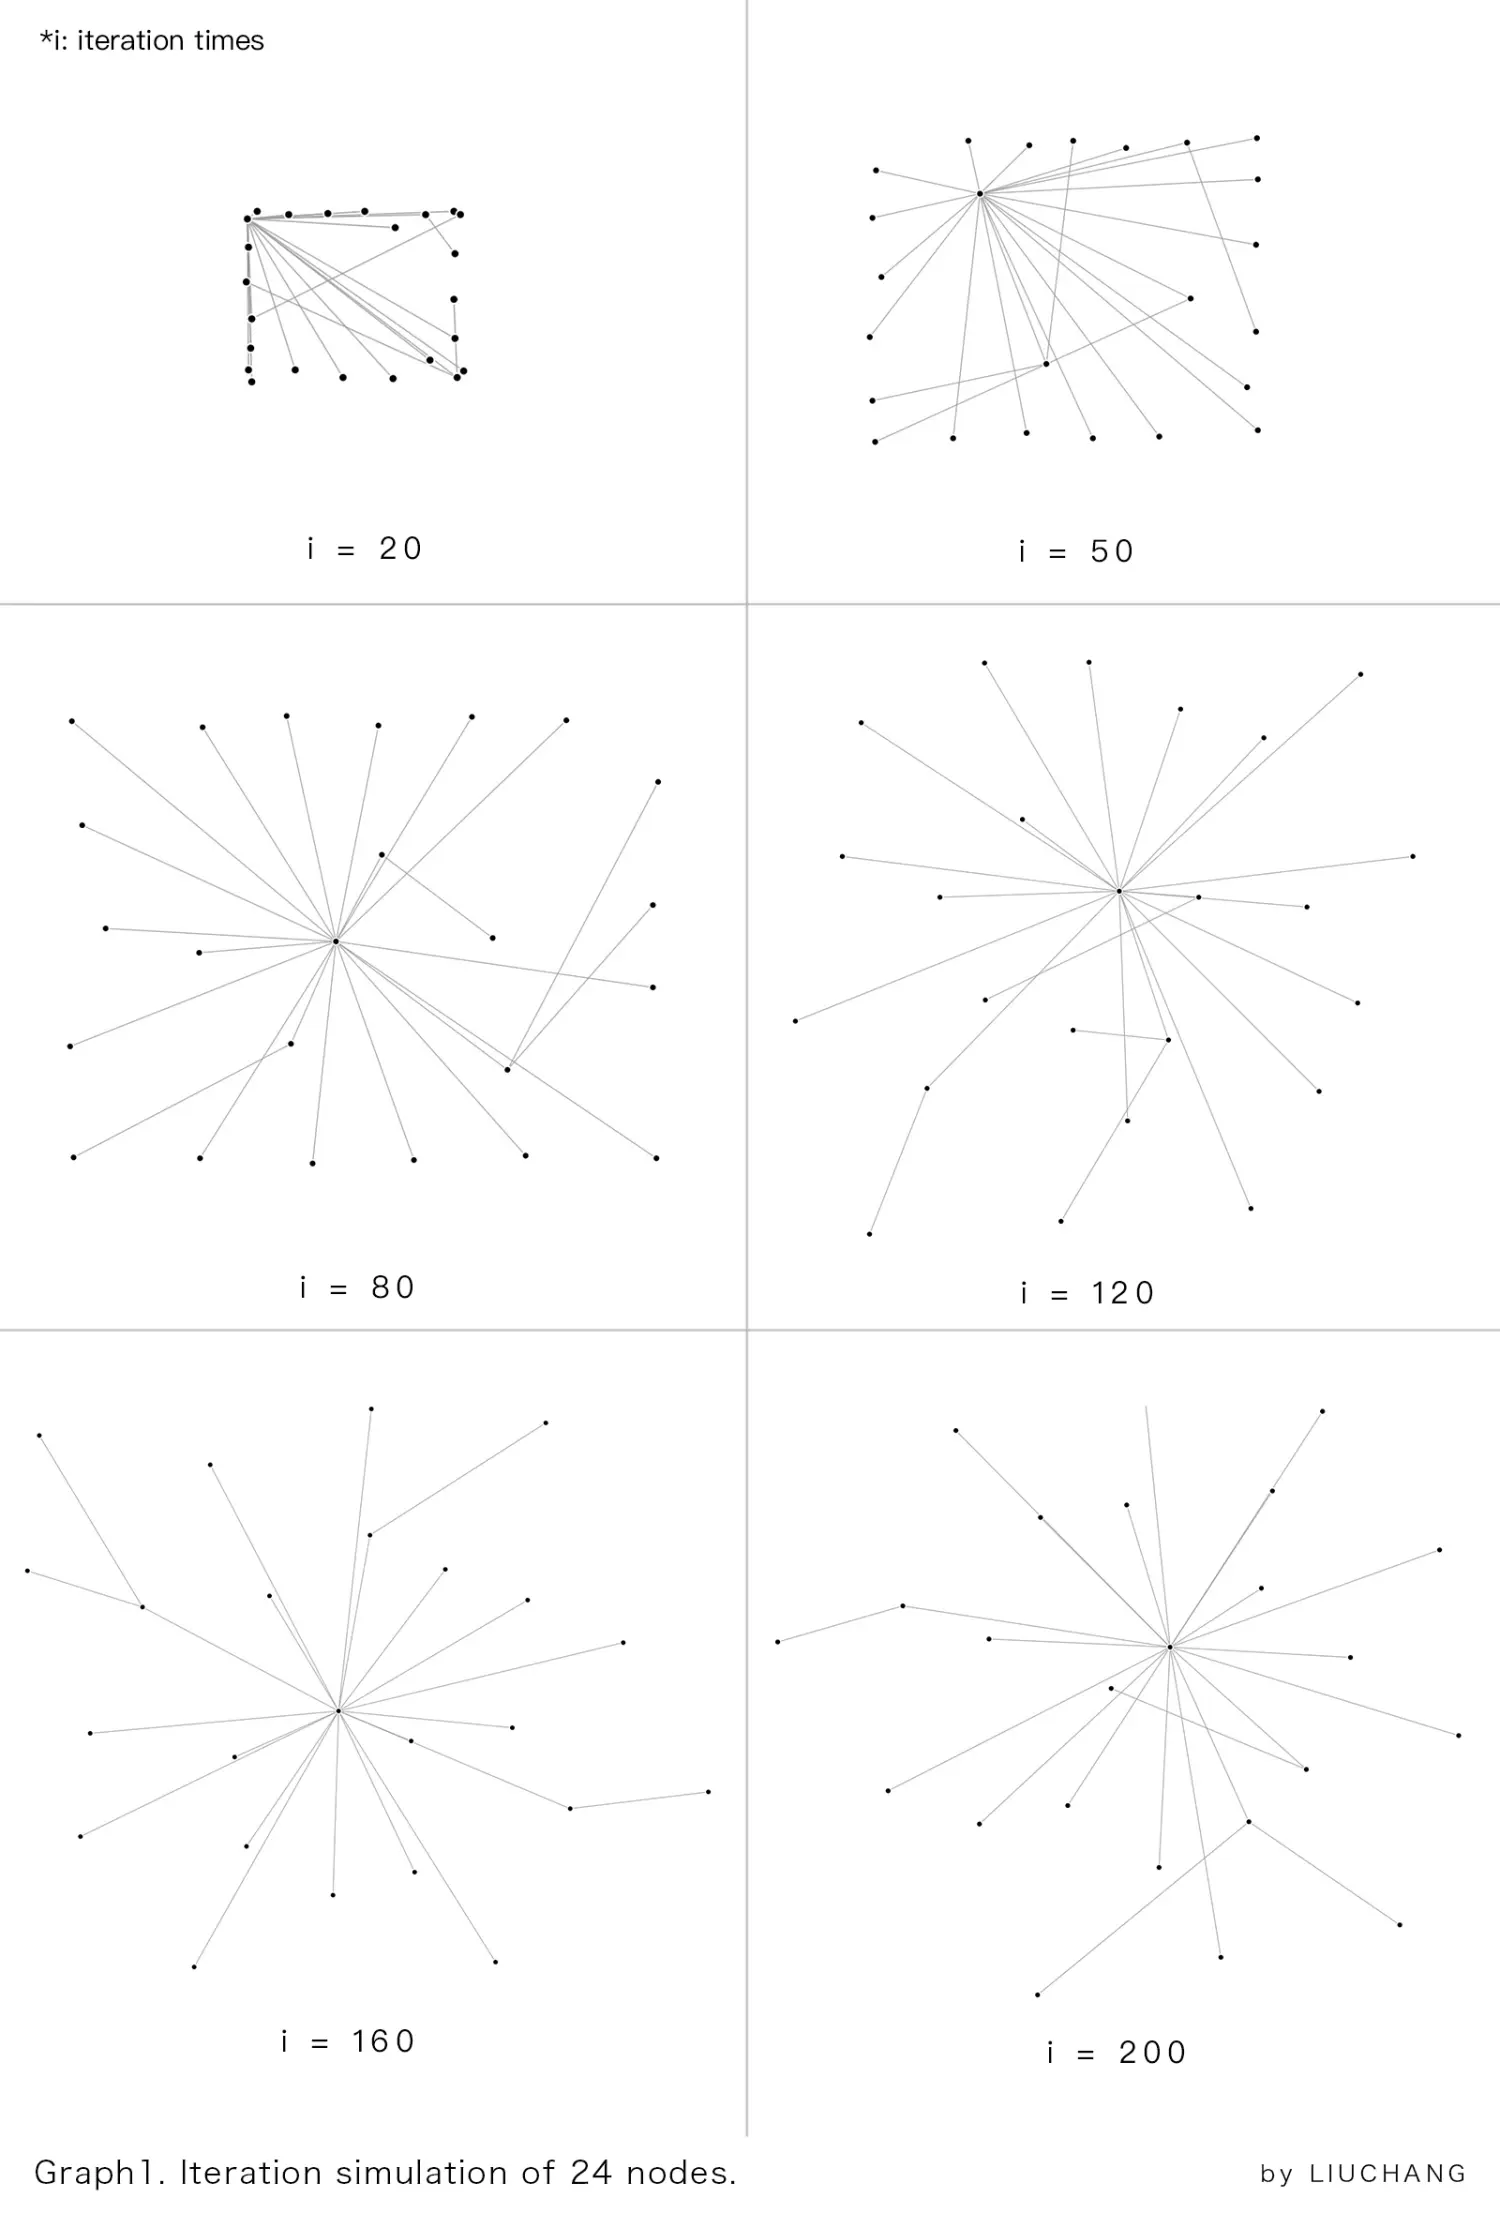 Graph 1. Iteration simulation of 24 nodes.